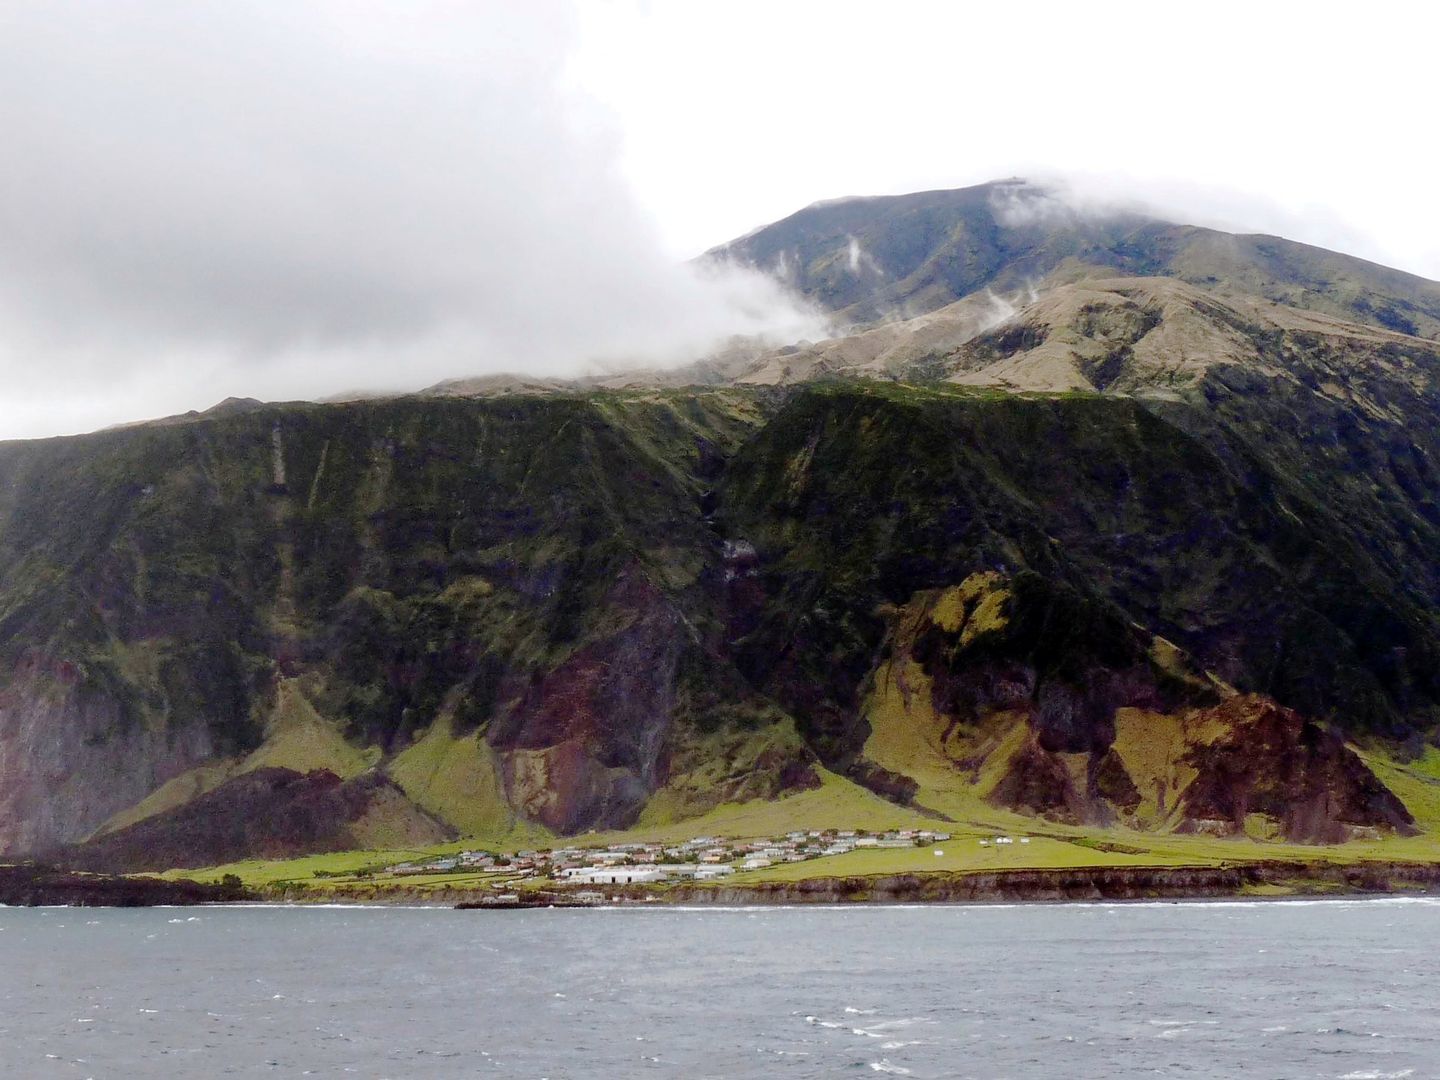 Edinburgh of the Seven Seas (depedencja Tristan da Cunha)